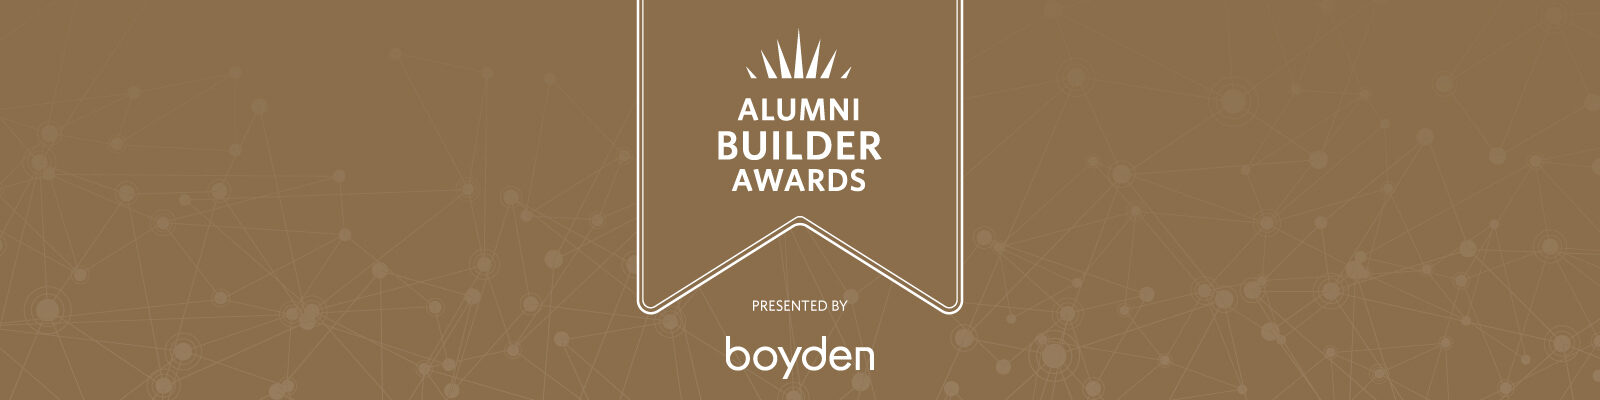 Alumni Builder Awards - Presented by Boyden